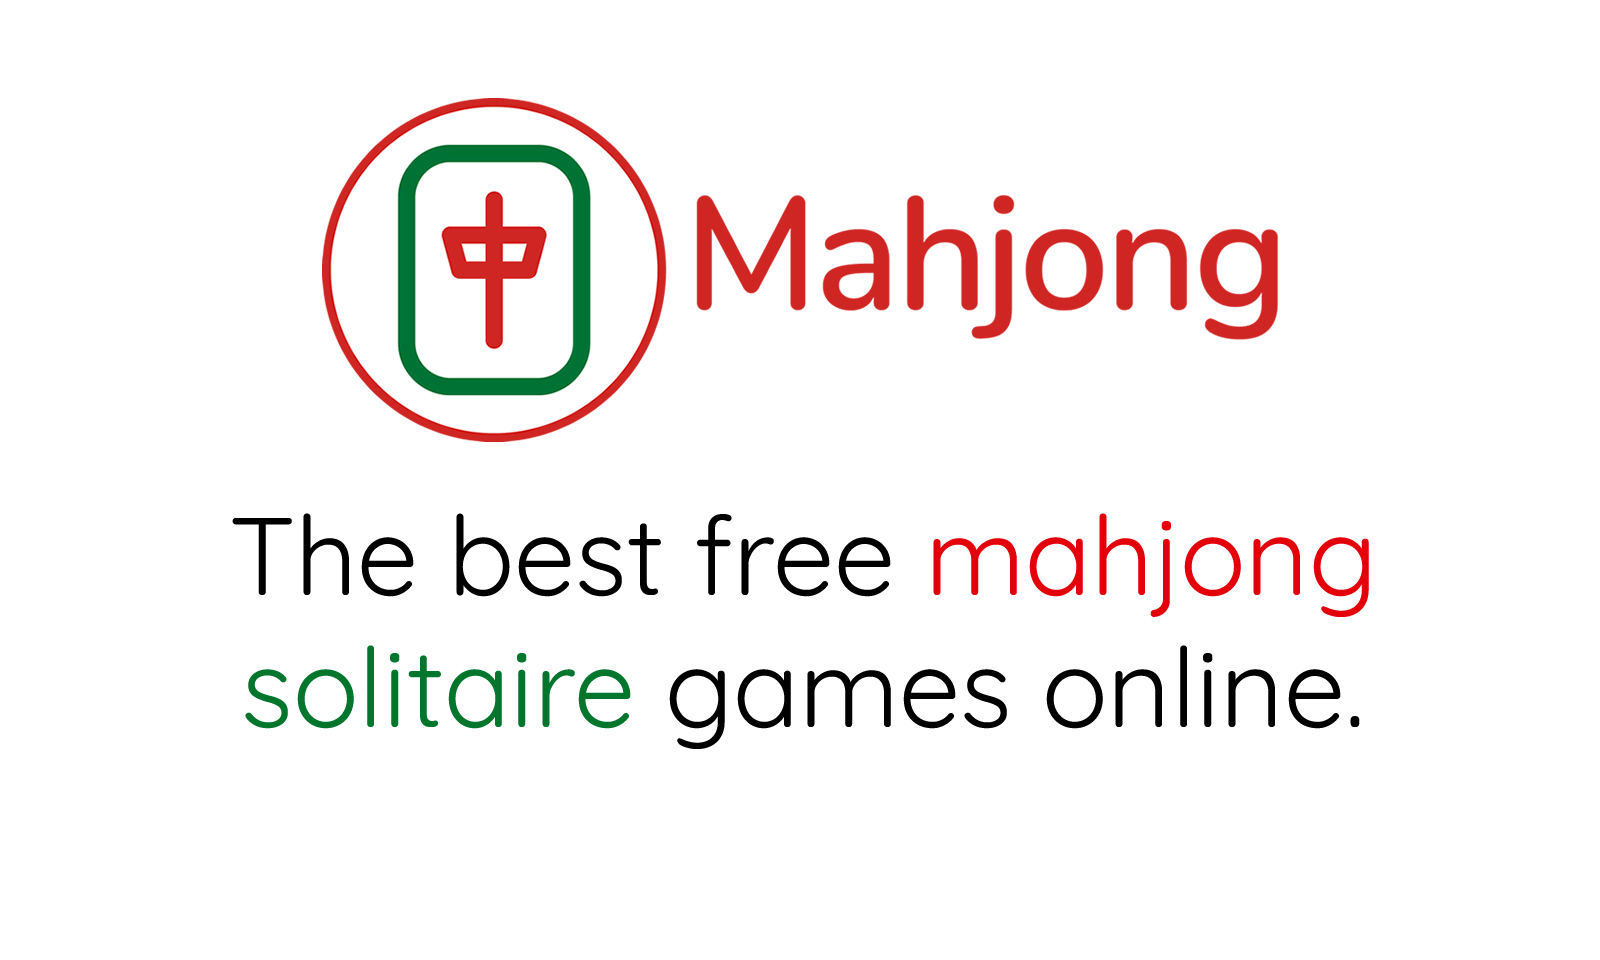 Mahjong por Niveles - juega Mahjong gratis pantalla completa!